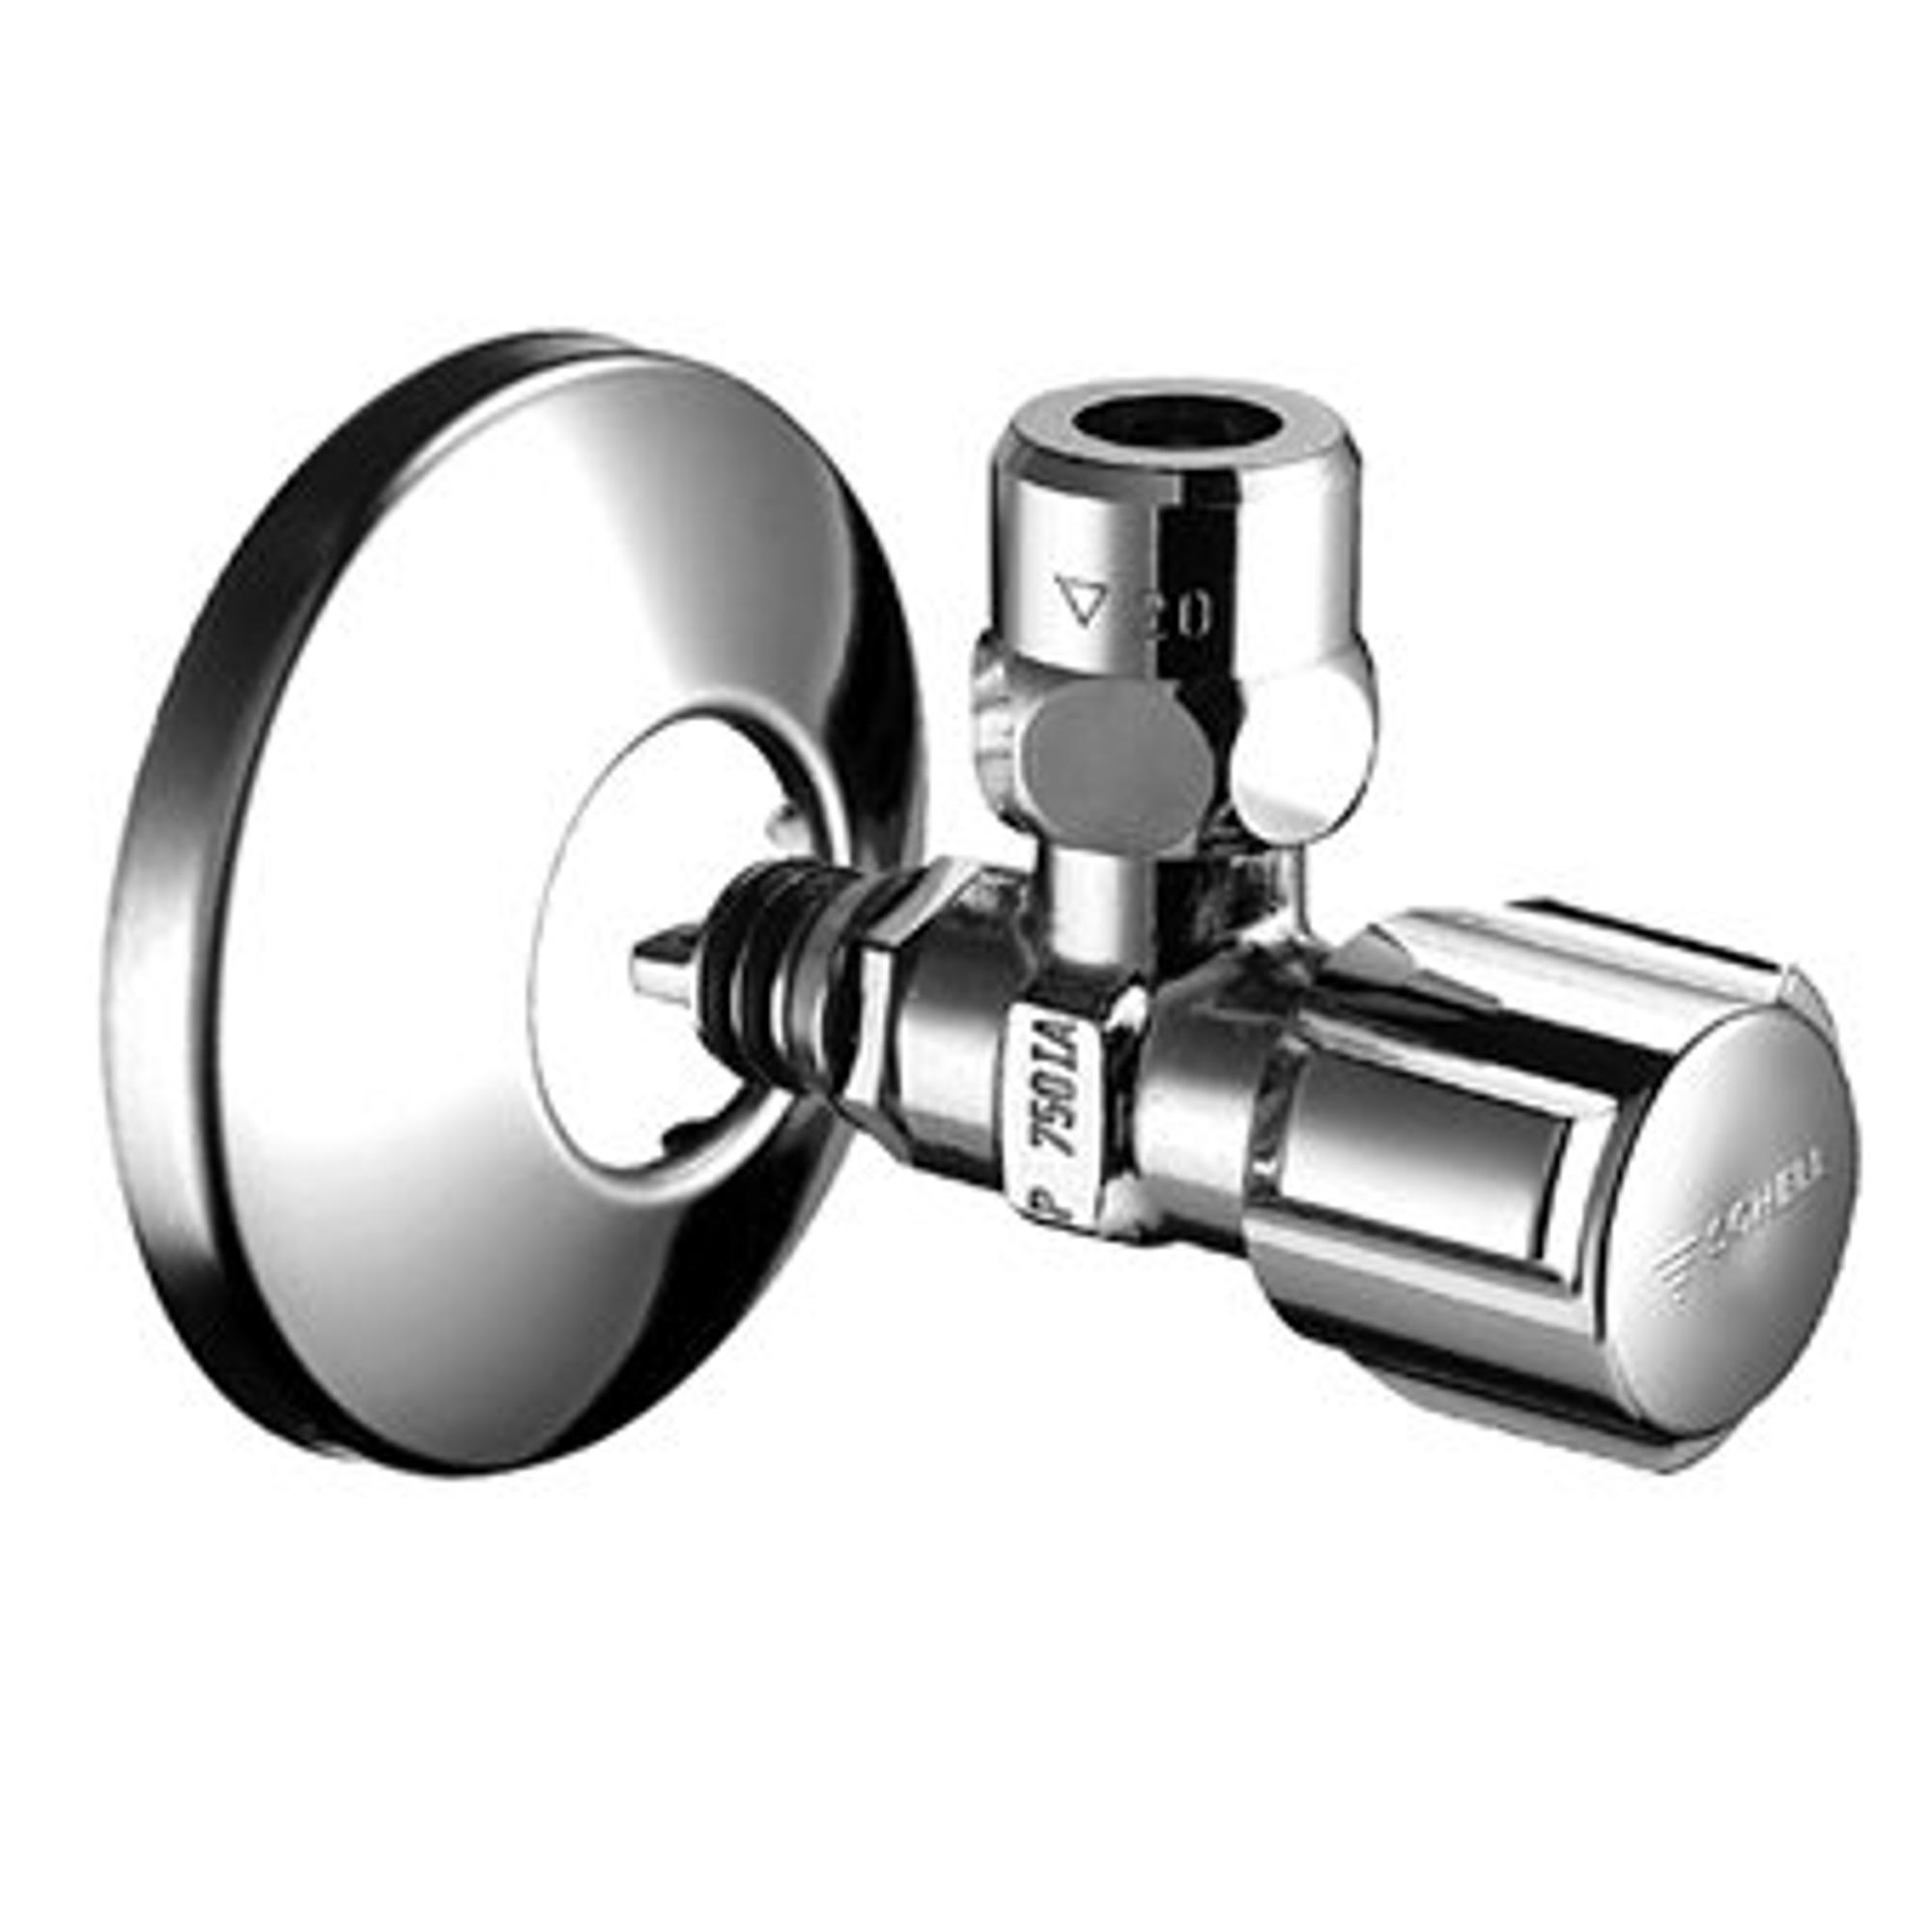 https://static.rorix.nl/image/product/plieger/2000x2000/440094.jpg/schell-quick-robinet-d-arret-pour-installation-sanitaire-0440094.jpg